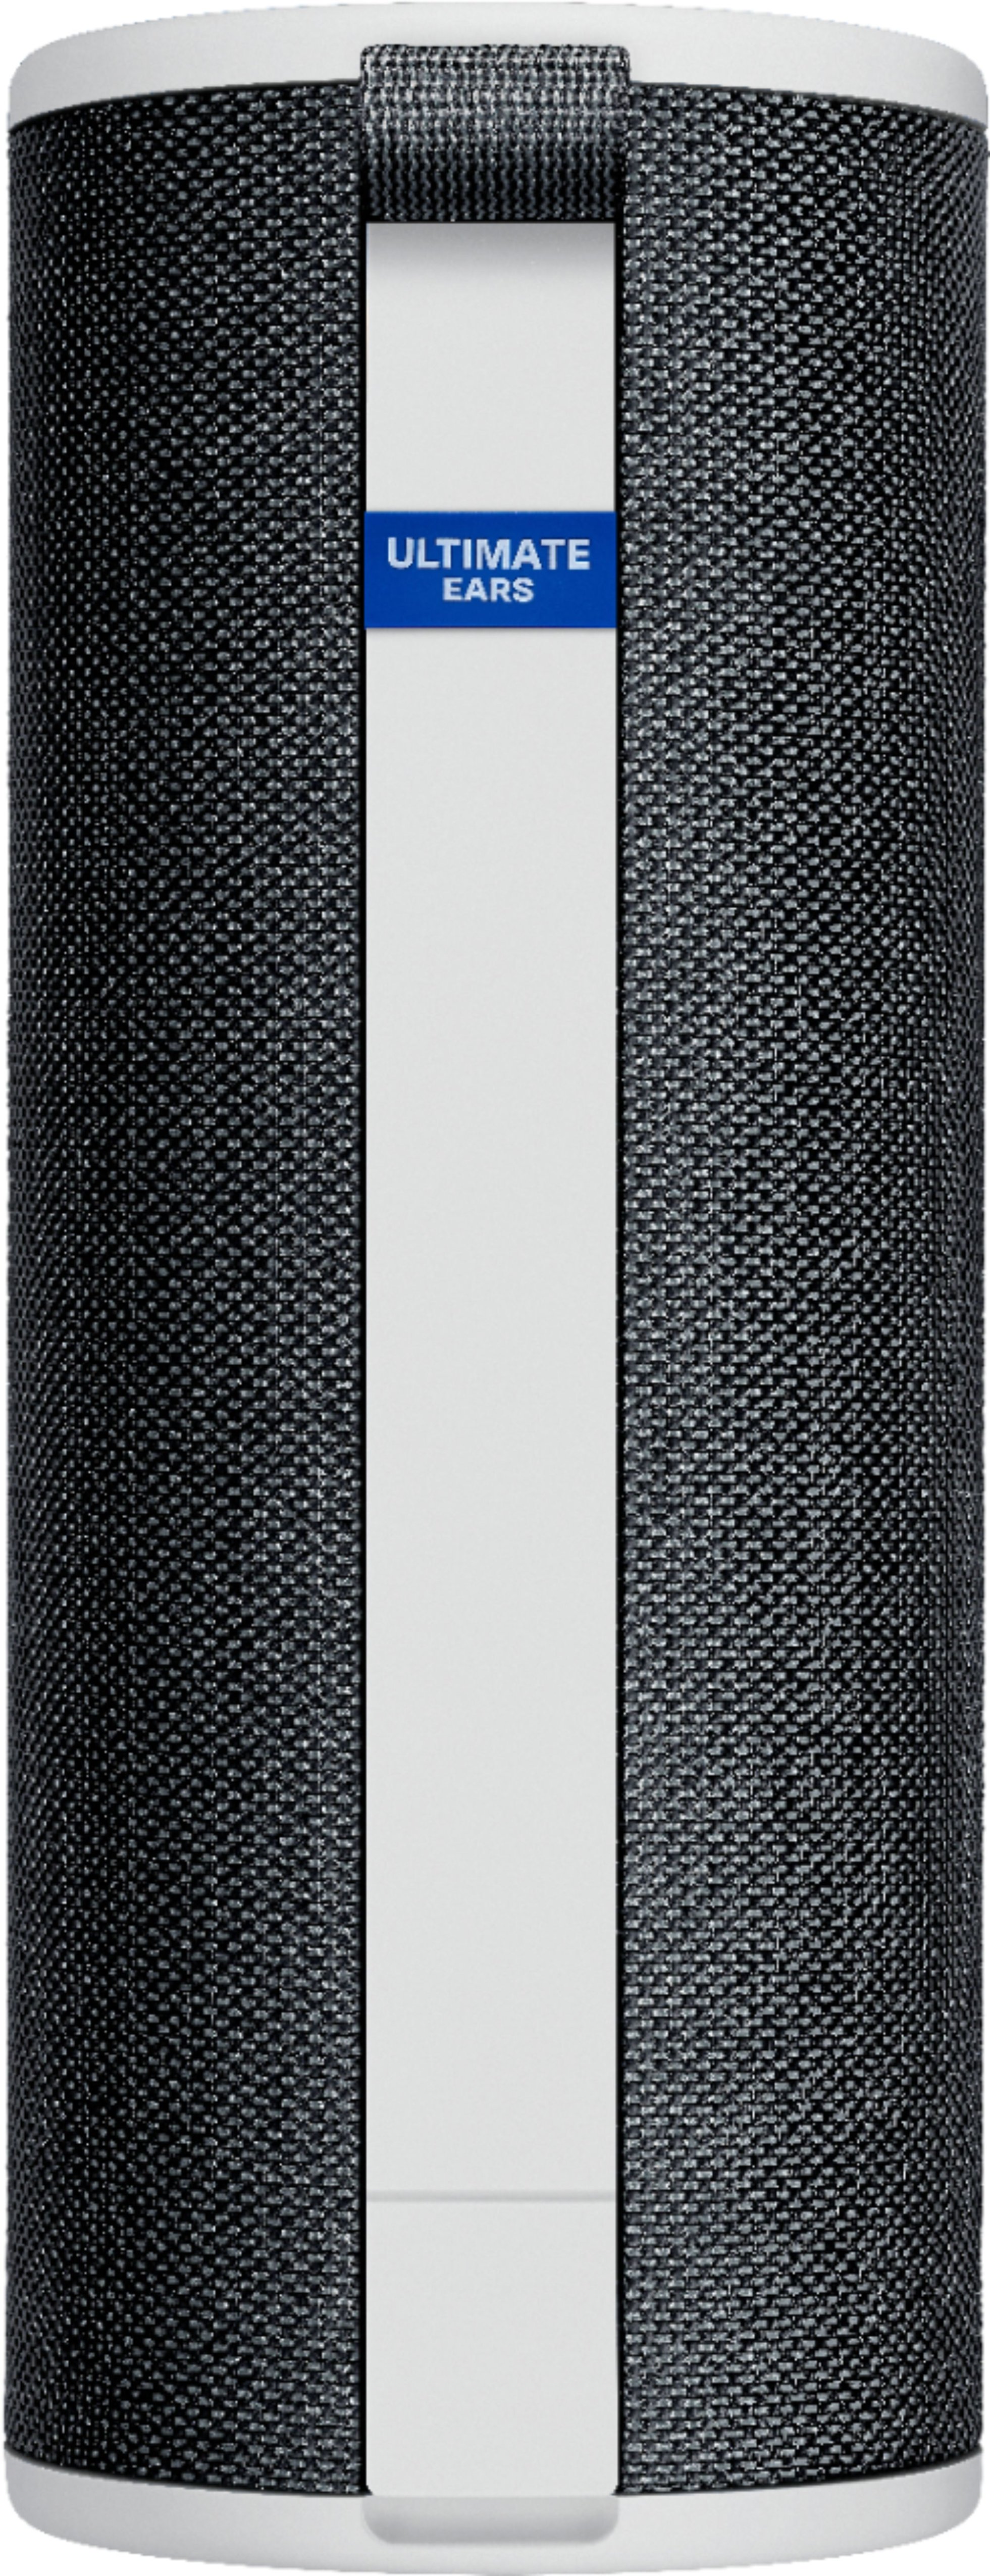 Boomer Speaker Haut Parleur - Modèle 3.1--AK-1403 - NAS00216